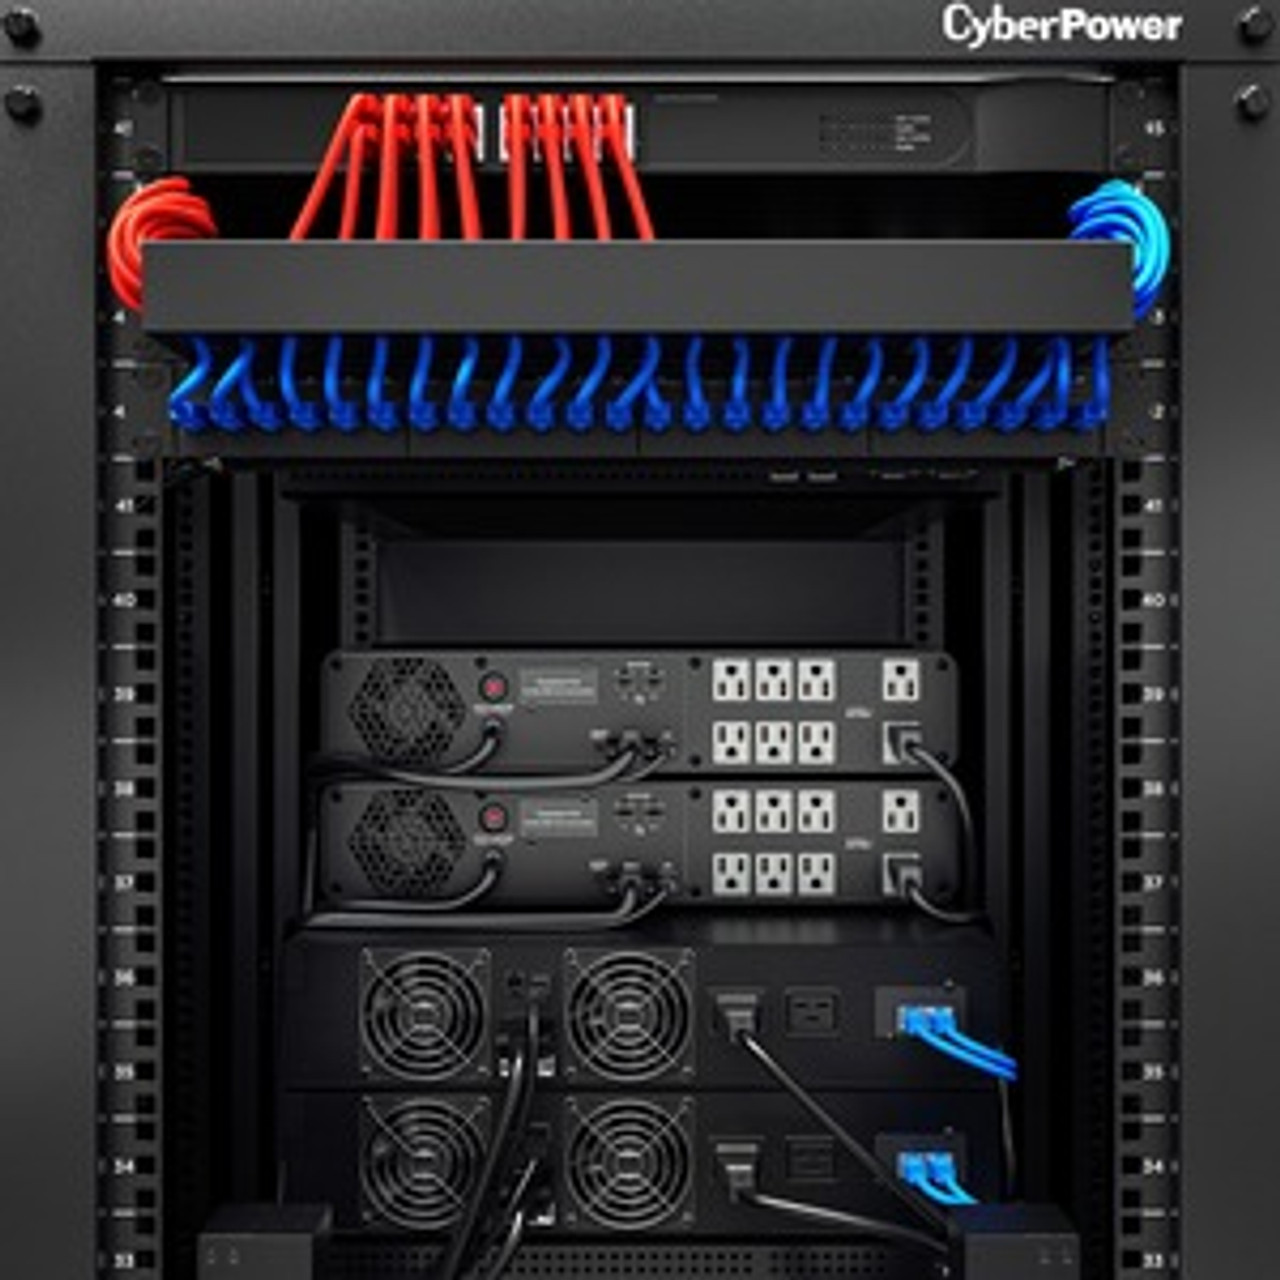 CyberPower CP1500PFCRM2U PFC Sinewave UPS Systems - CP1500PFCRM2U